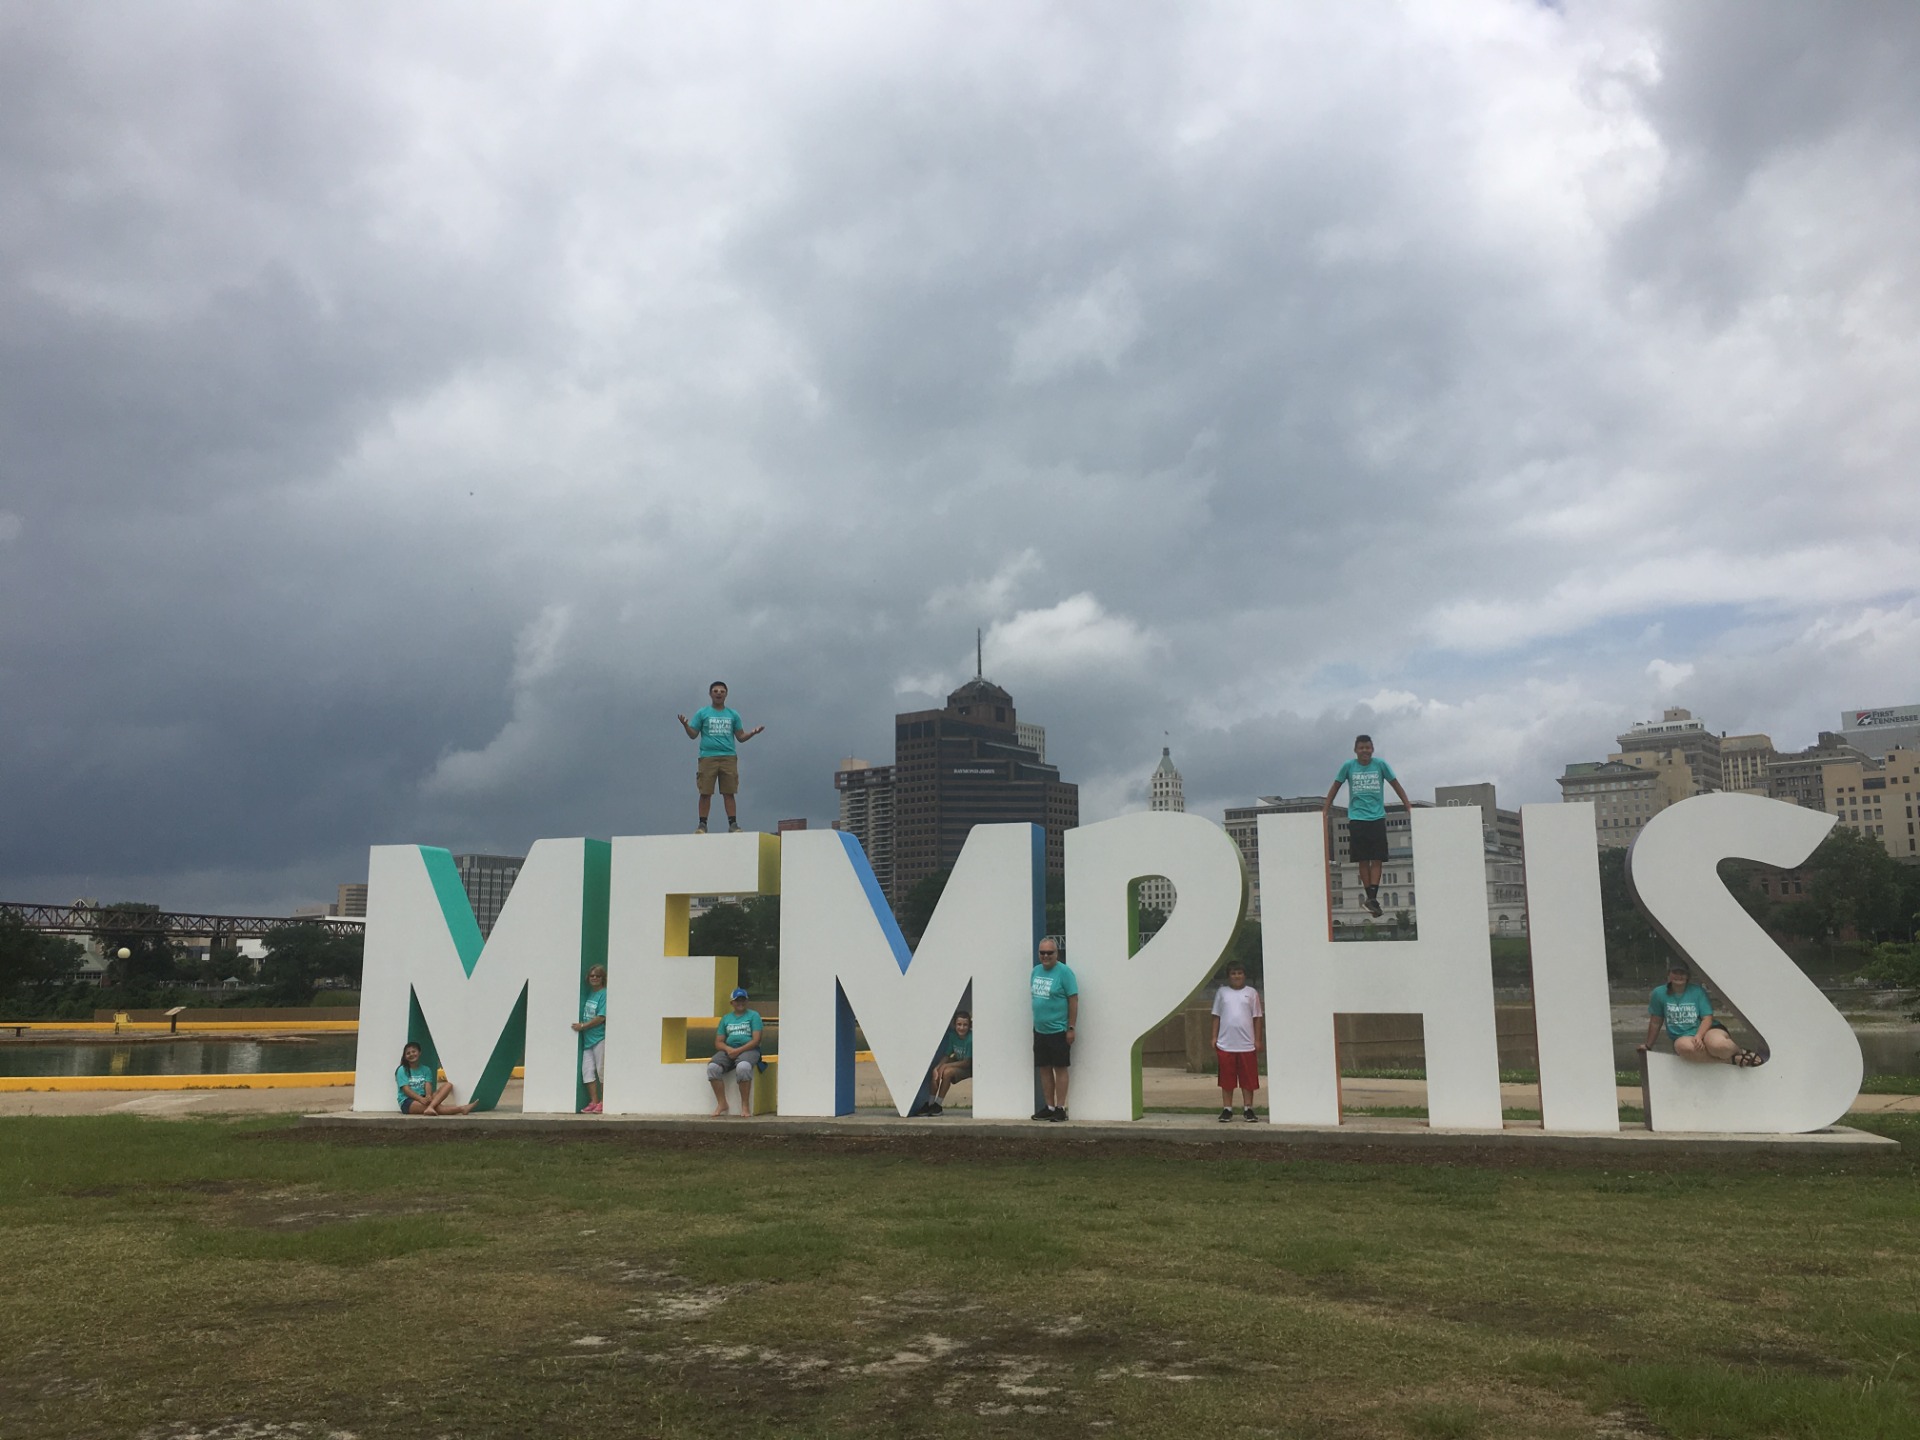 Praying over Memphis